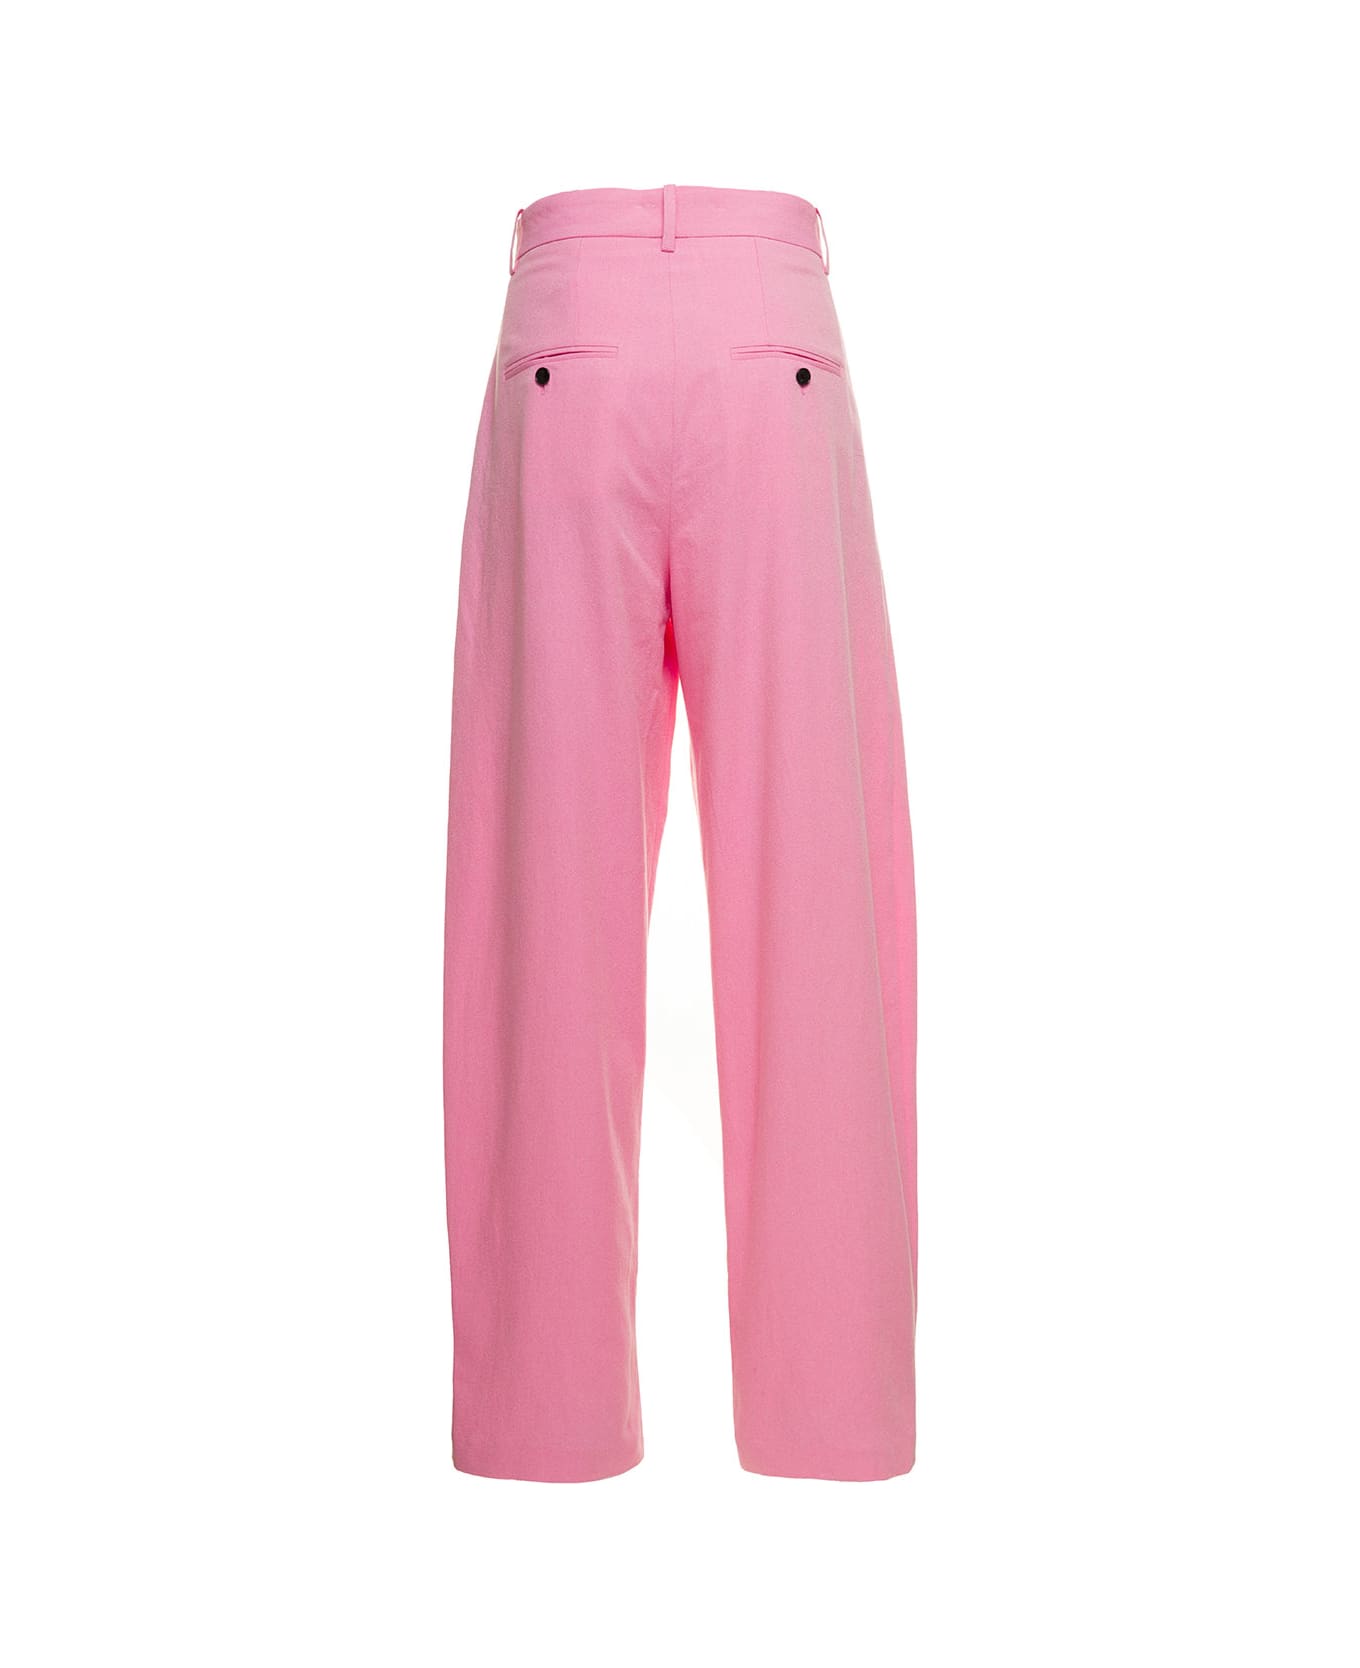 Isabel Marant 'sopiaeva' Baby Pink Palazzo Pants With Belt Loops In Viscose And Cotton Woman Isabel Marant - Pink